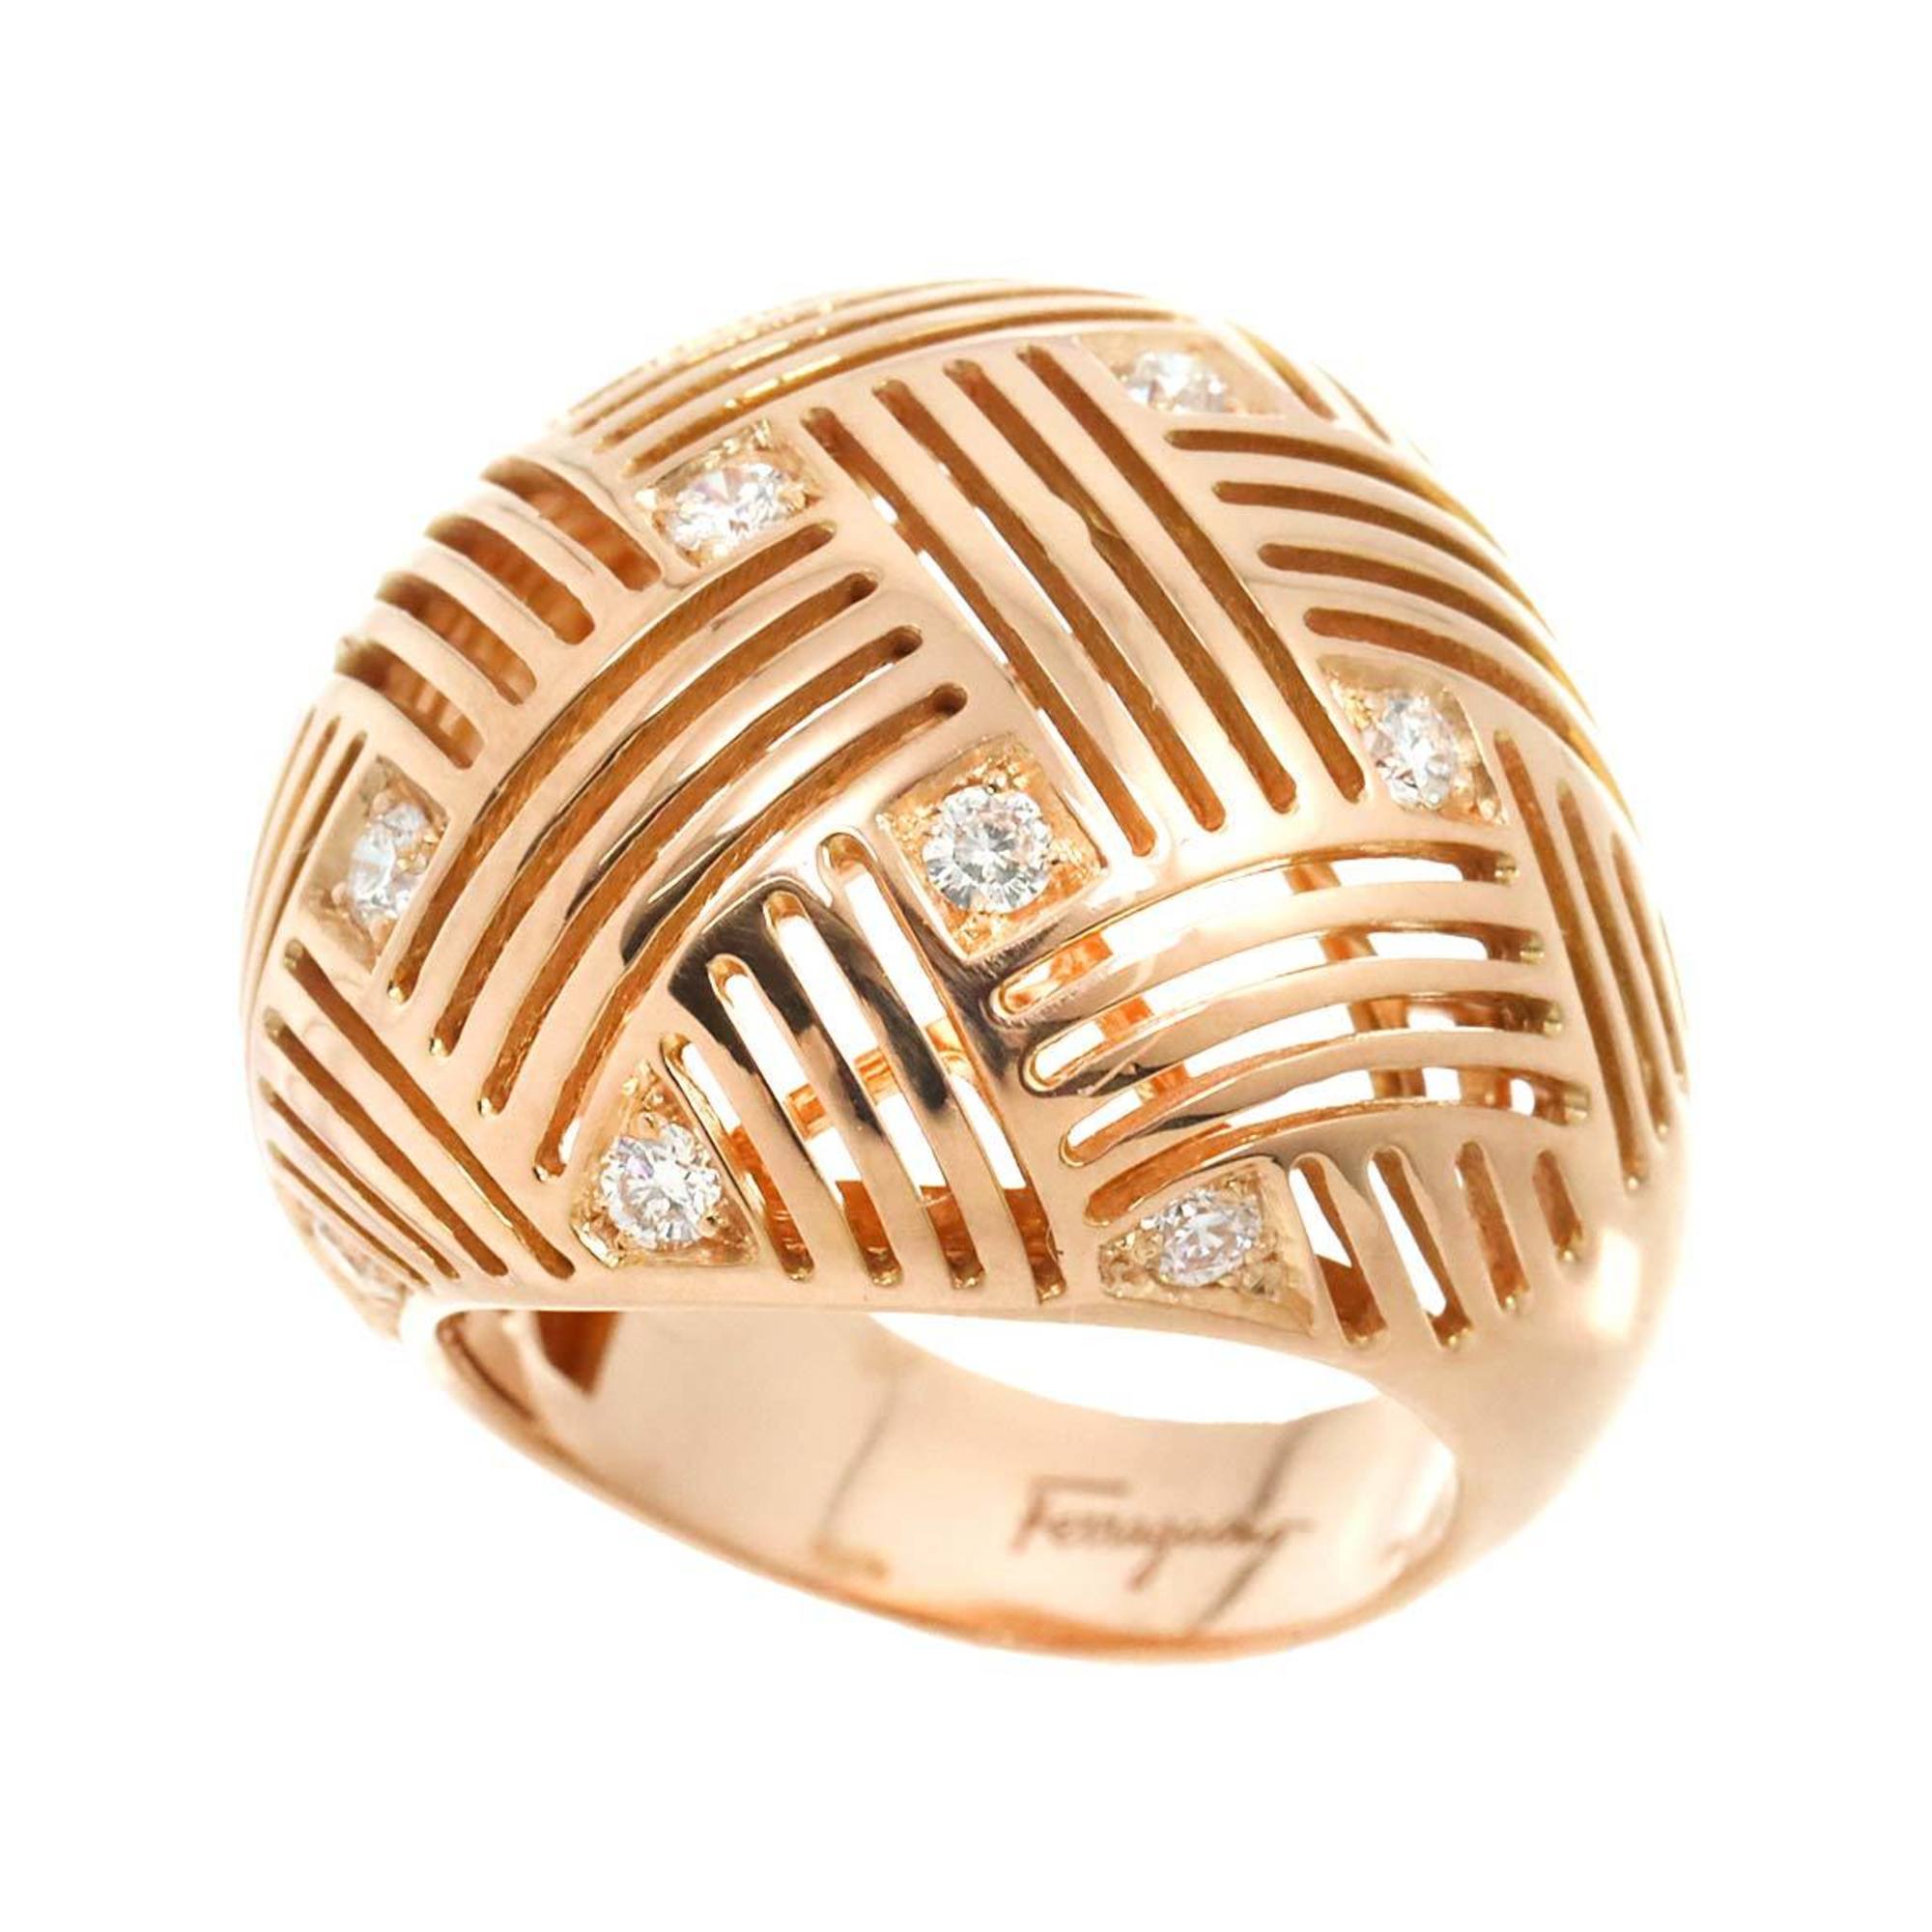 Salvatore Ferragamo No. 6.5 Ring Diamond K18 PG Pink Gold 750